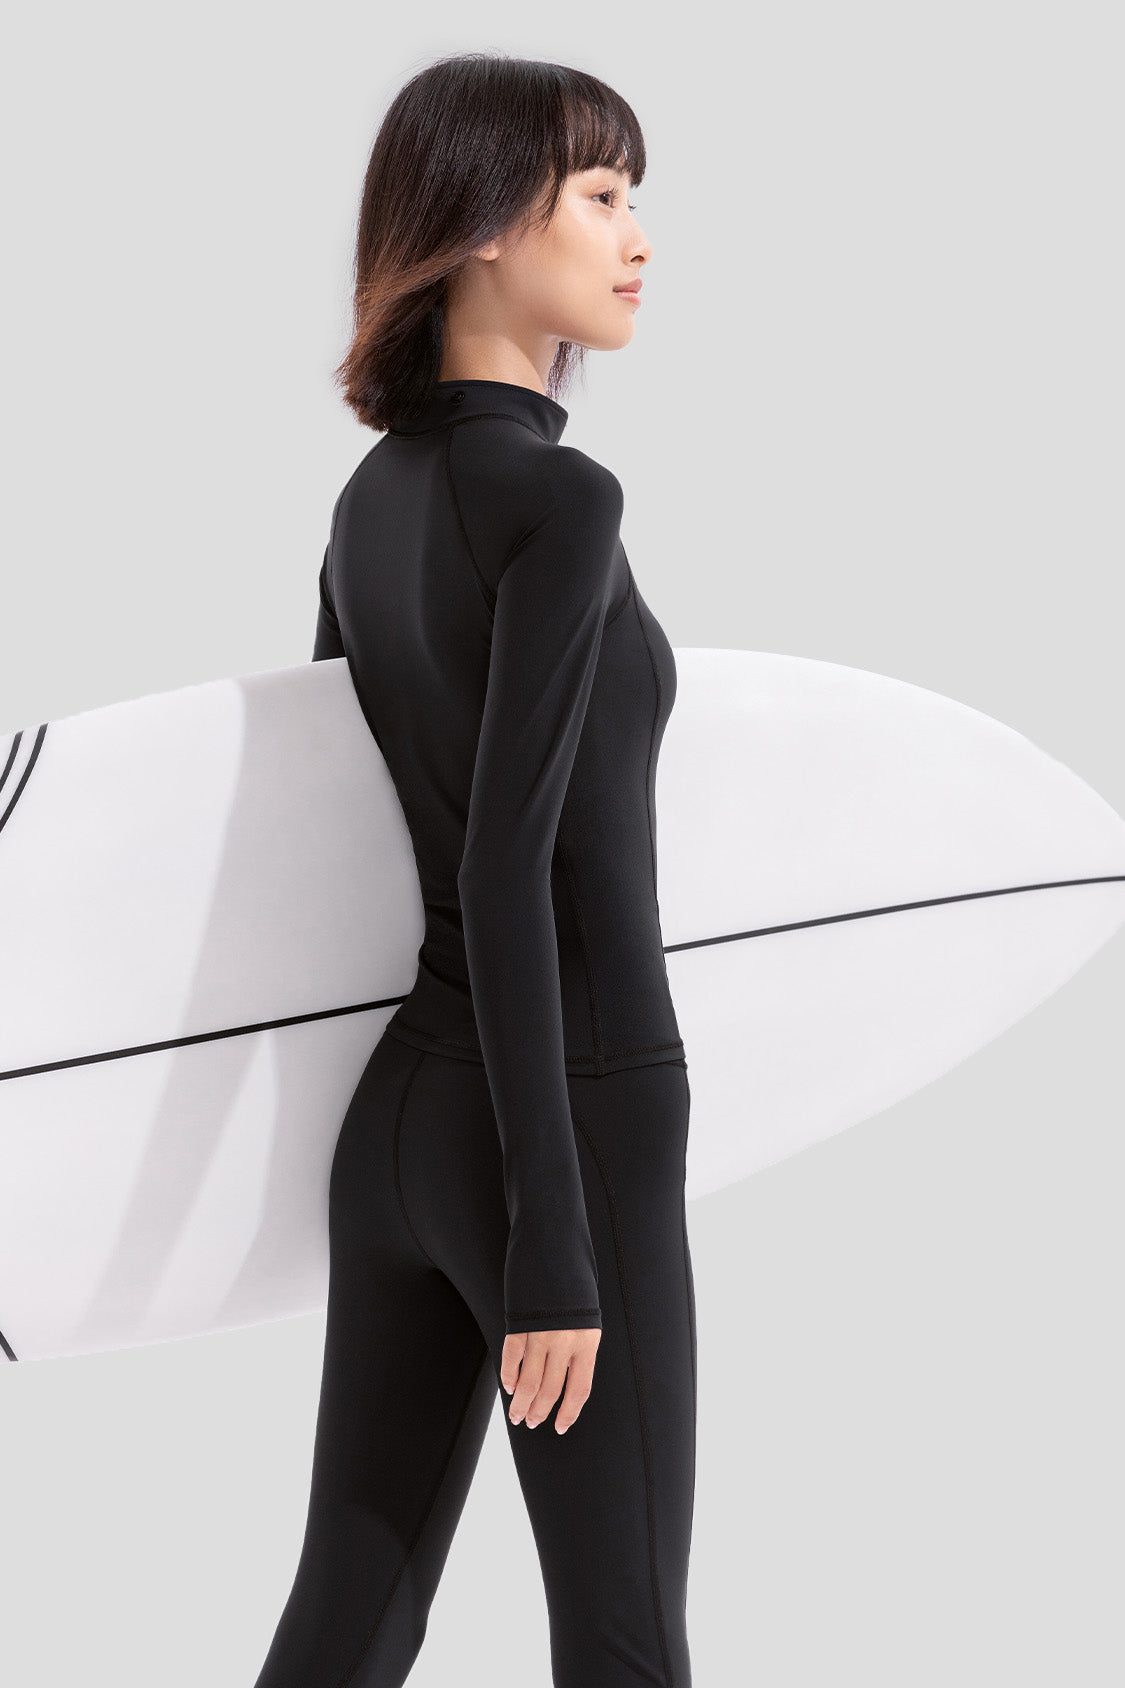 Sea Wonder - Women's Detachable Swimsuit UPF 50+